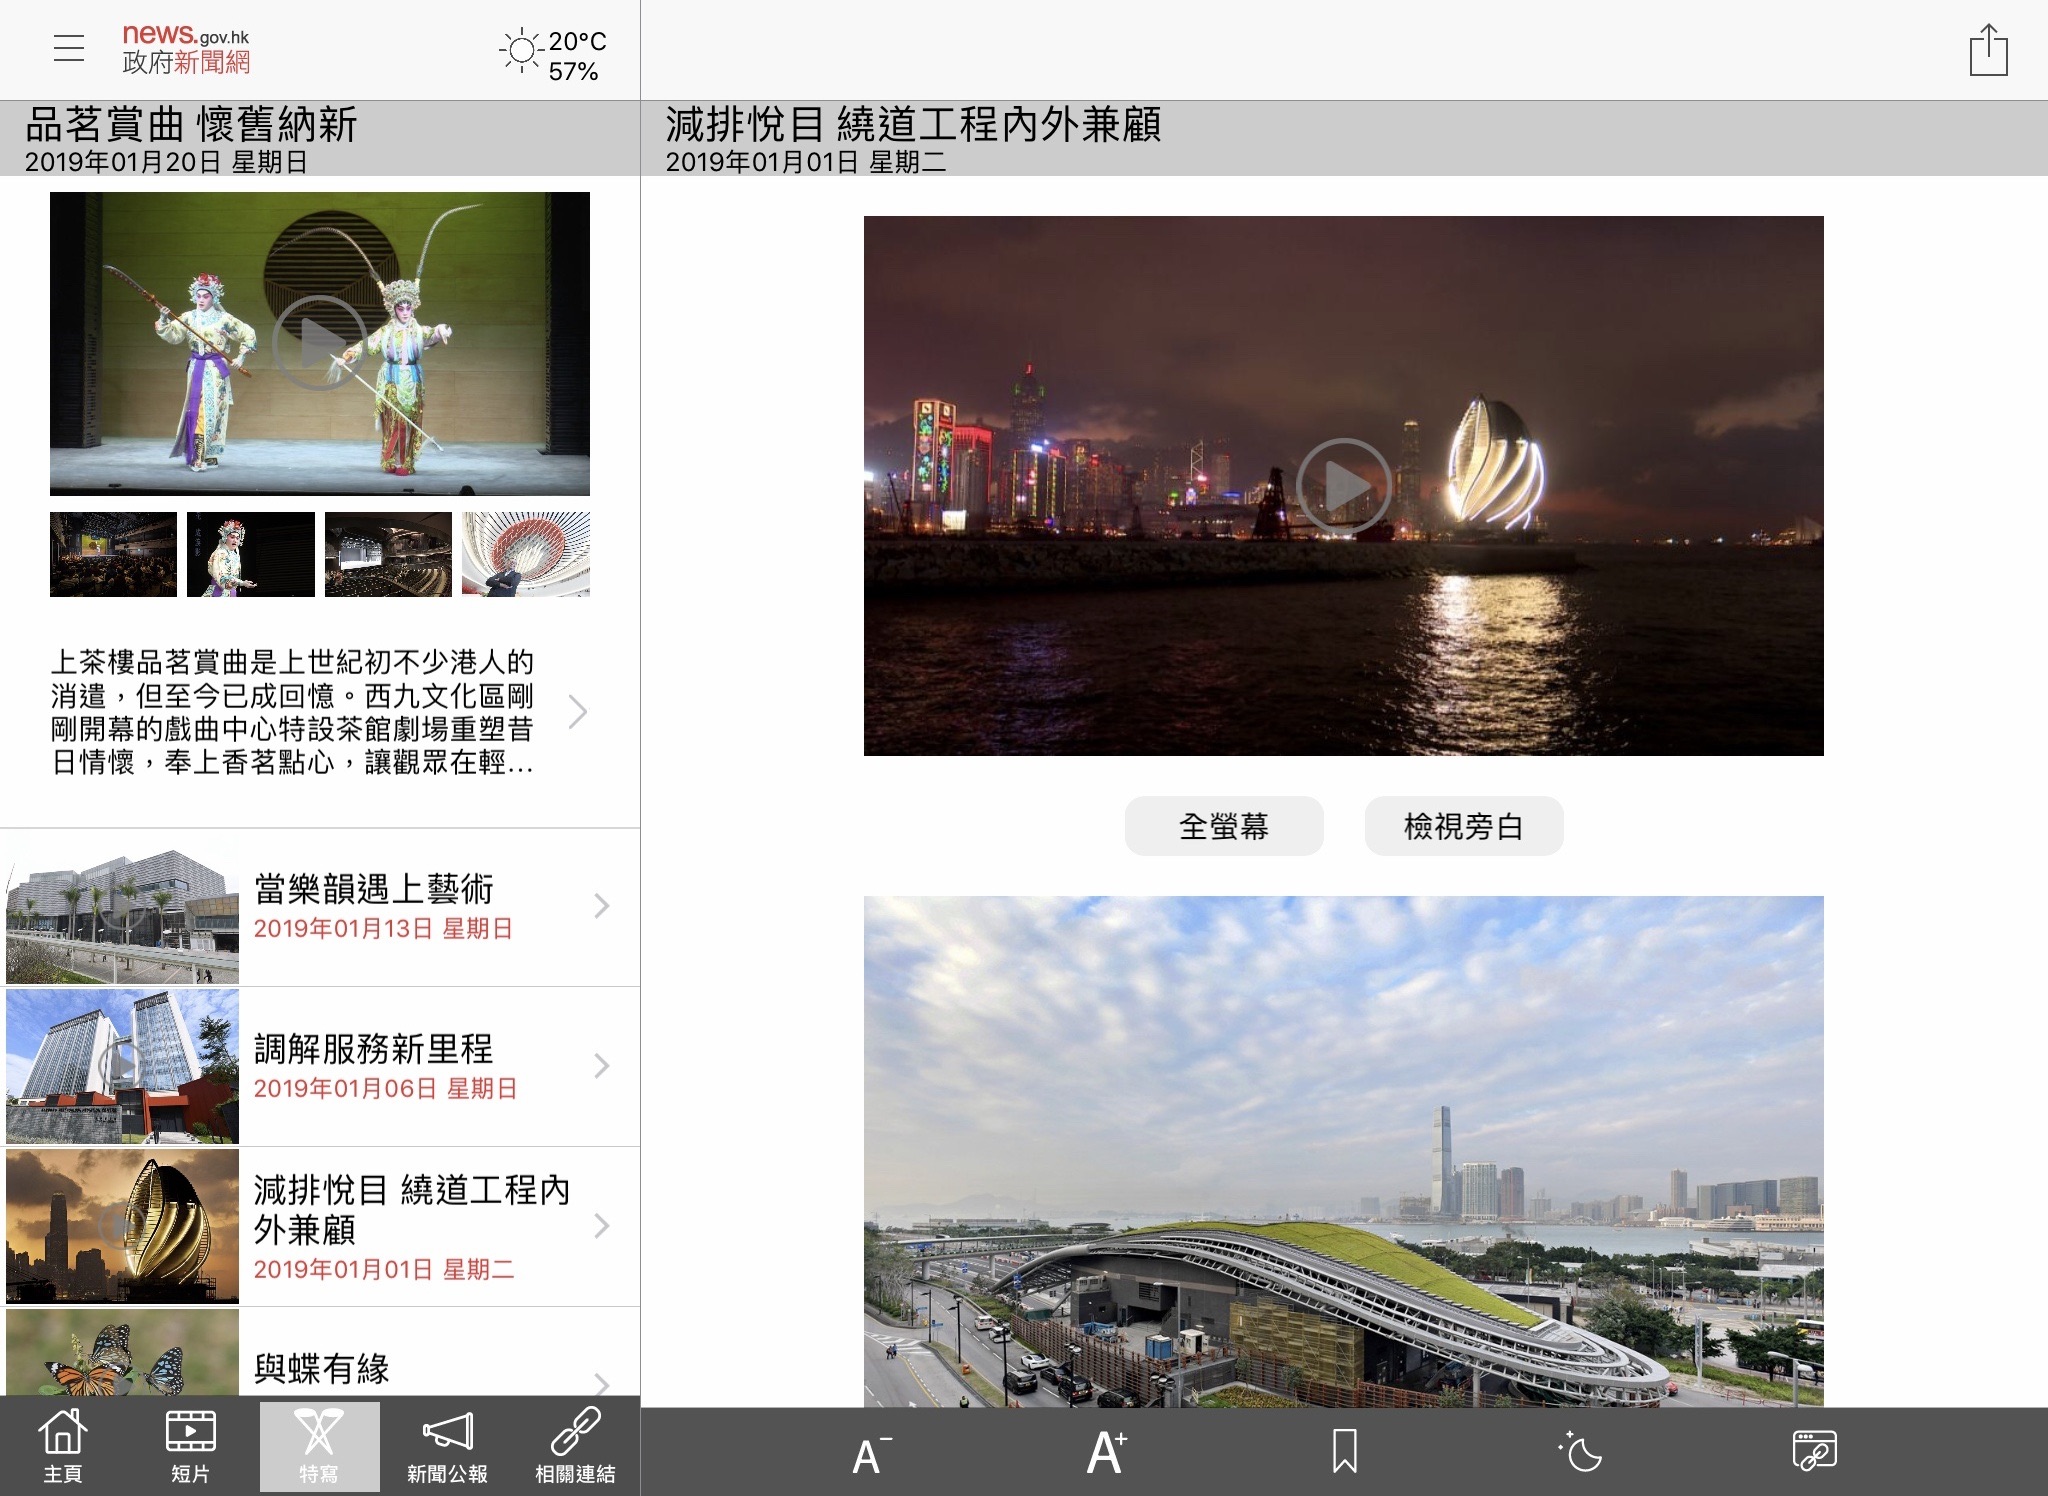 news.gov.hk 香港政府新聞網 screenshot 2